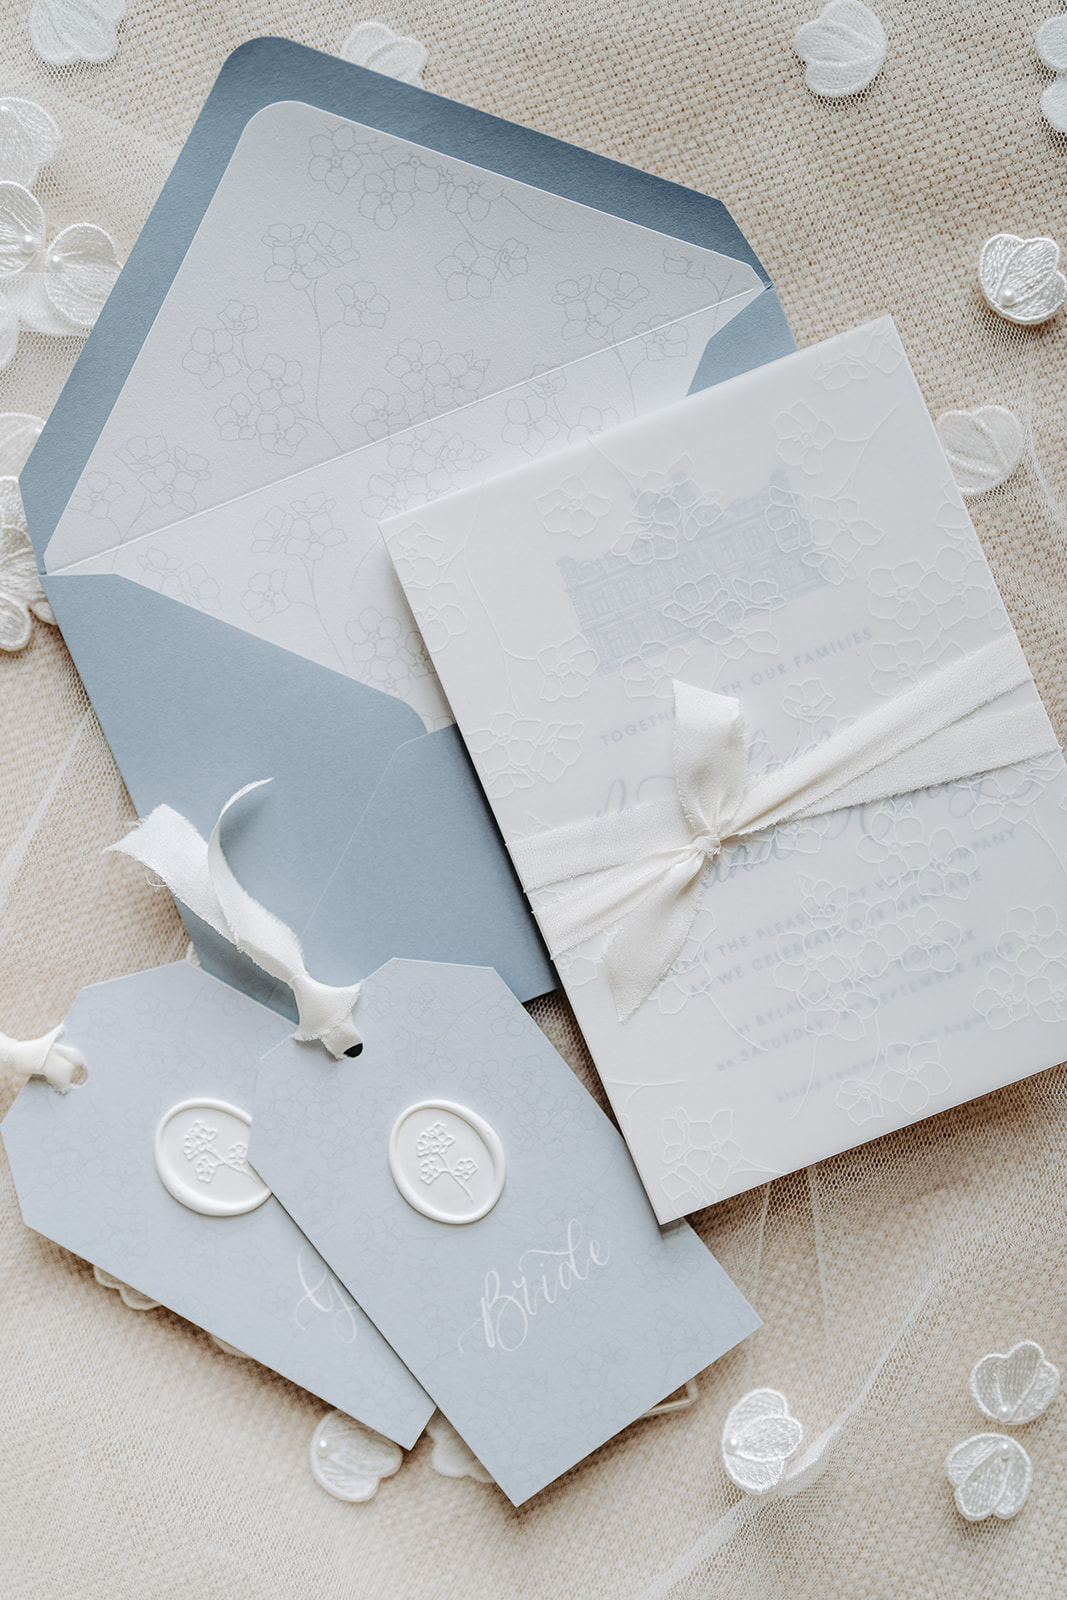 Bespoke Letterpress Printed wedding invitation suite